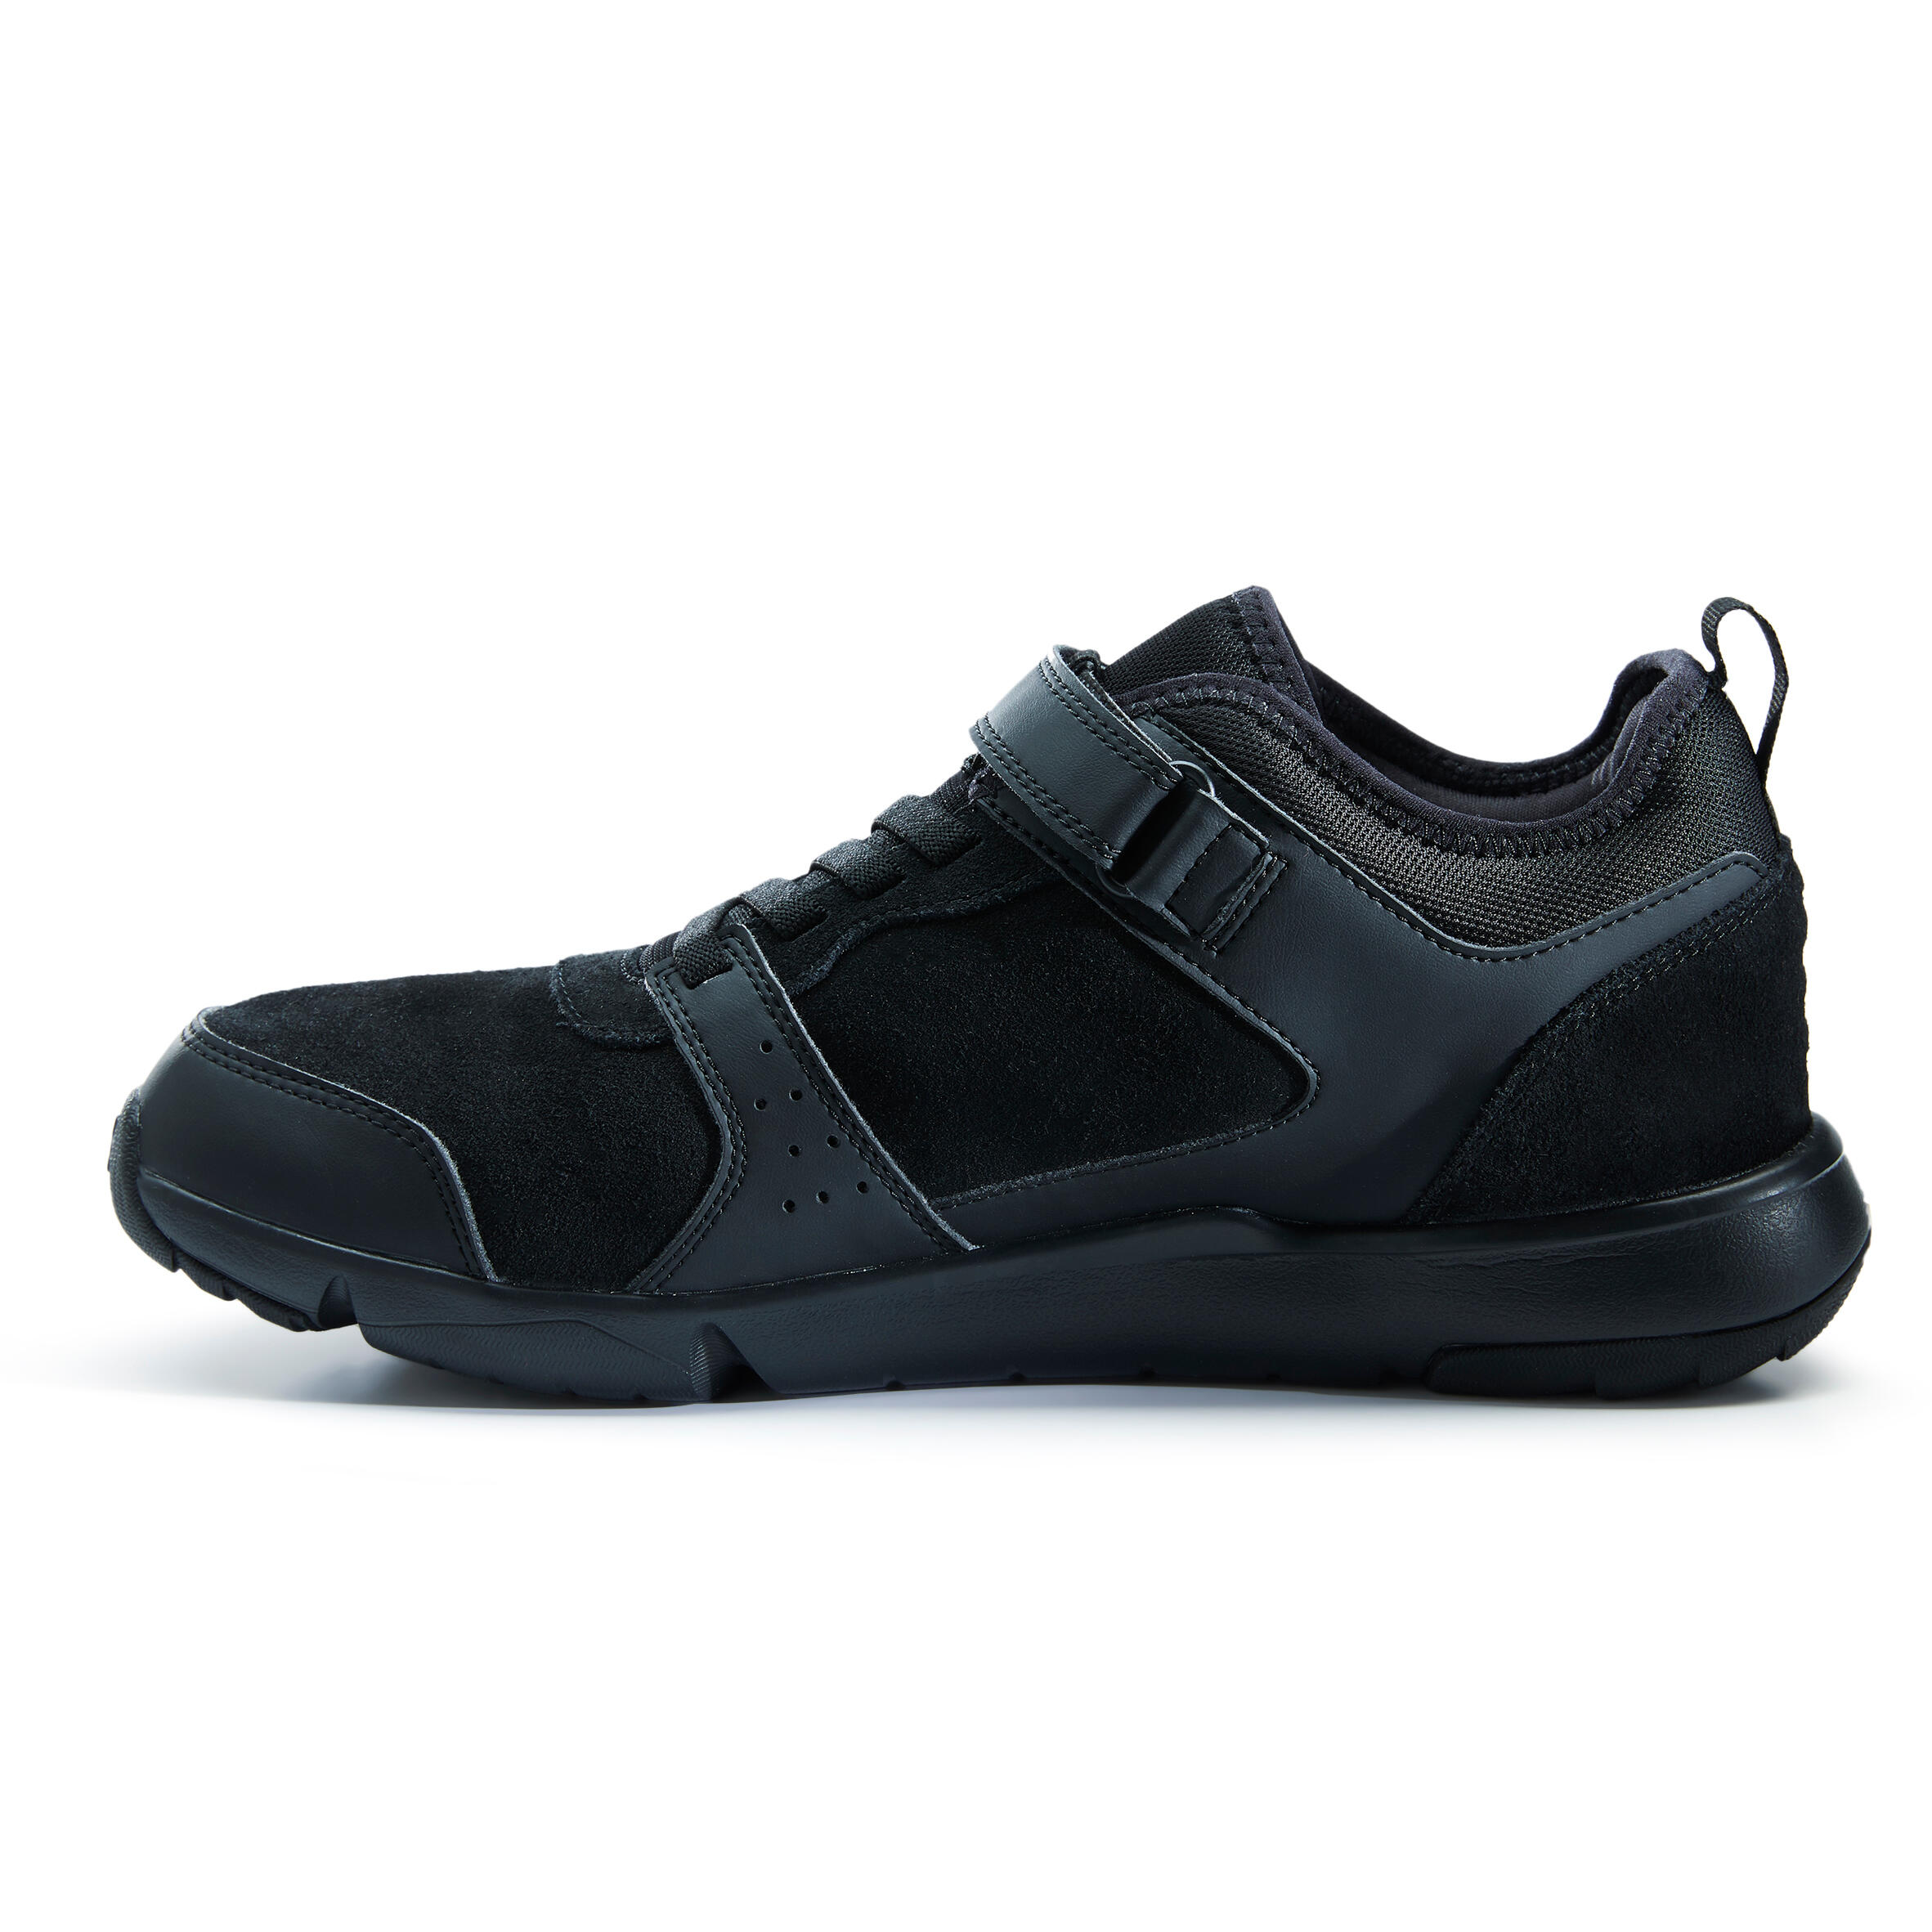 Actiwalk Easy Leather Men's Urban Walking Shoes - Black 13/14